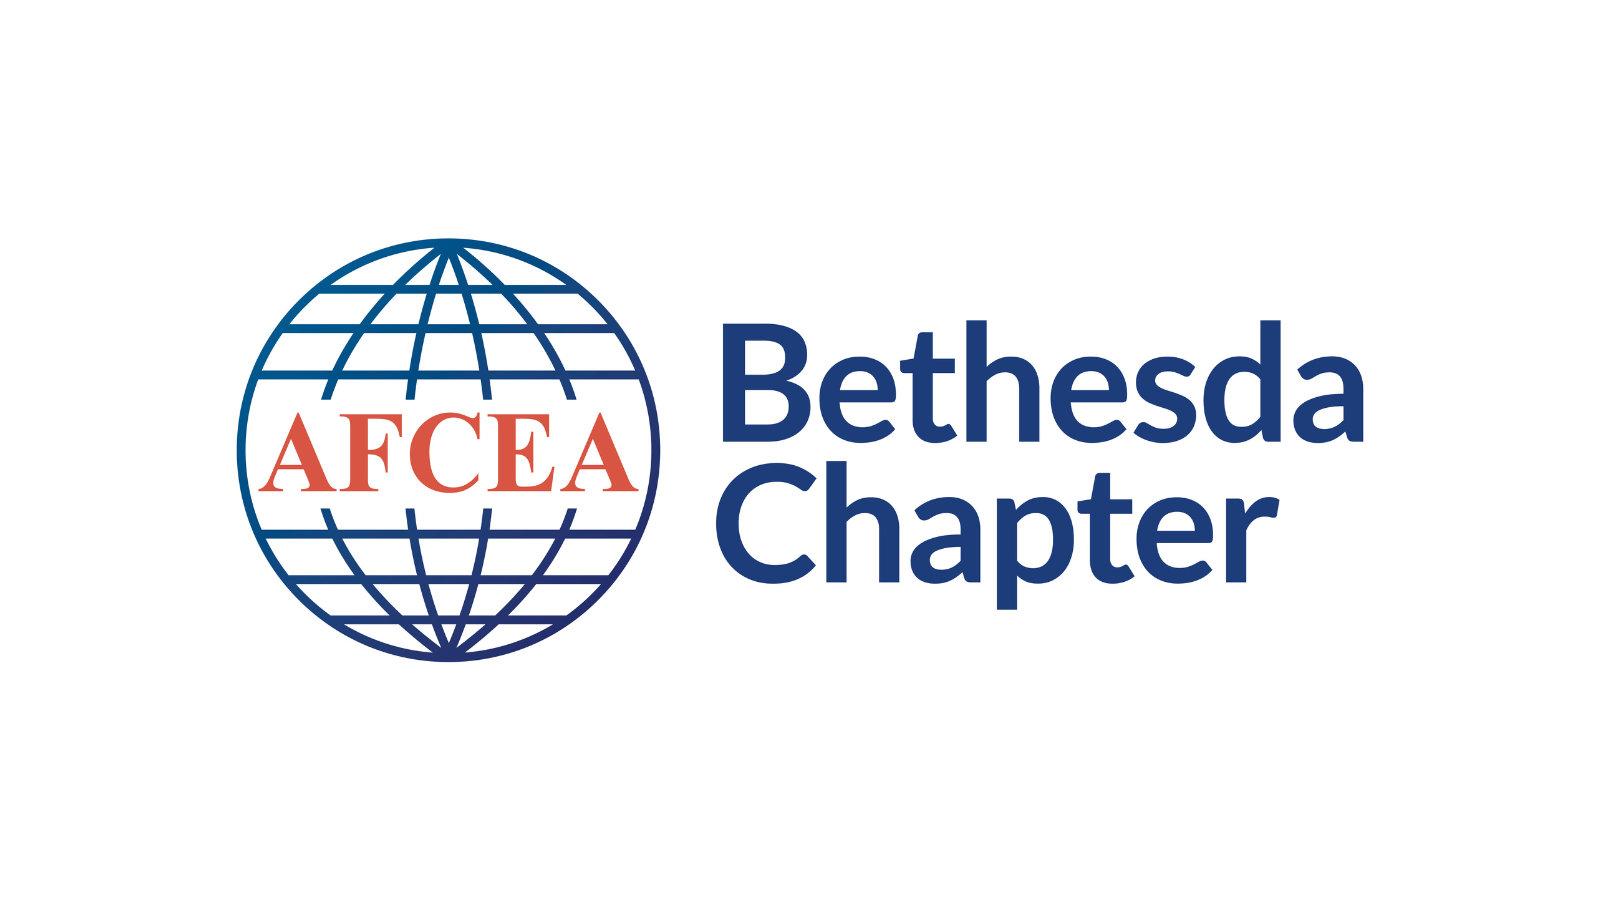 AFCEA Bethesda Chapter logo